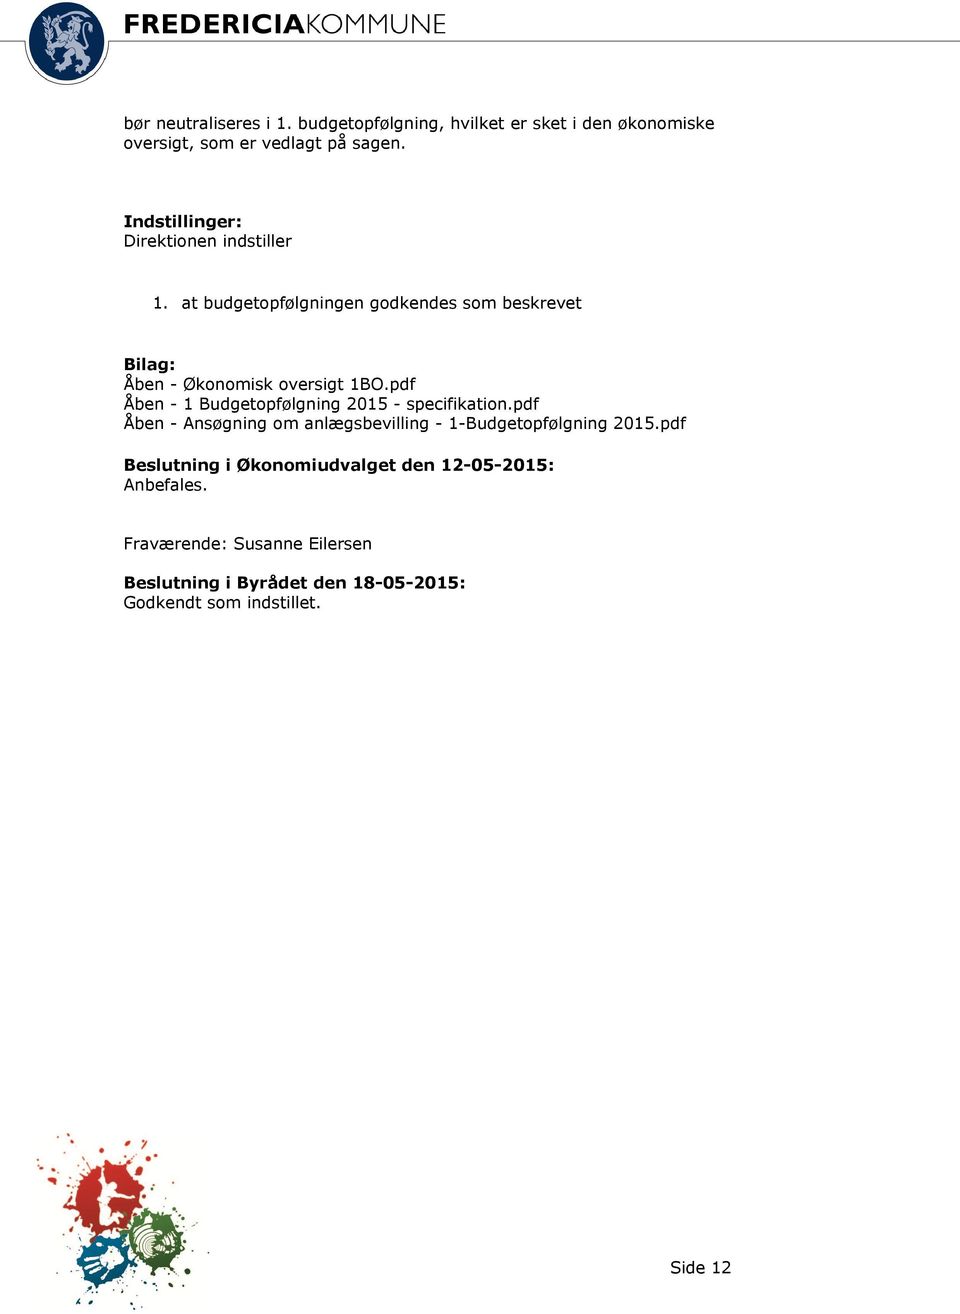 pdf Åben - 1 Budgetopfølgning 2015 - specifikation.pdf Åben - Ansøgning om anlægsbevilling - 1-Budgetopfølgning 2015.